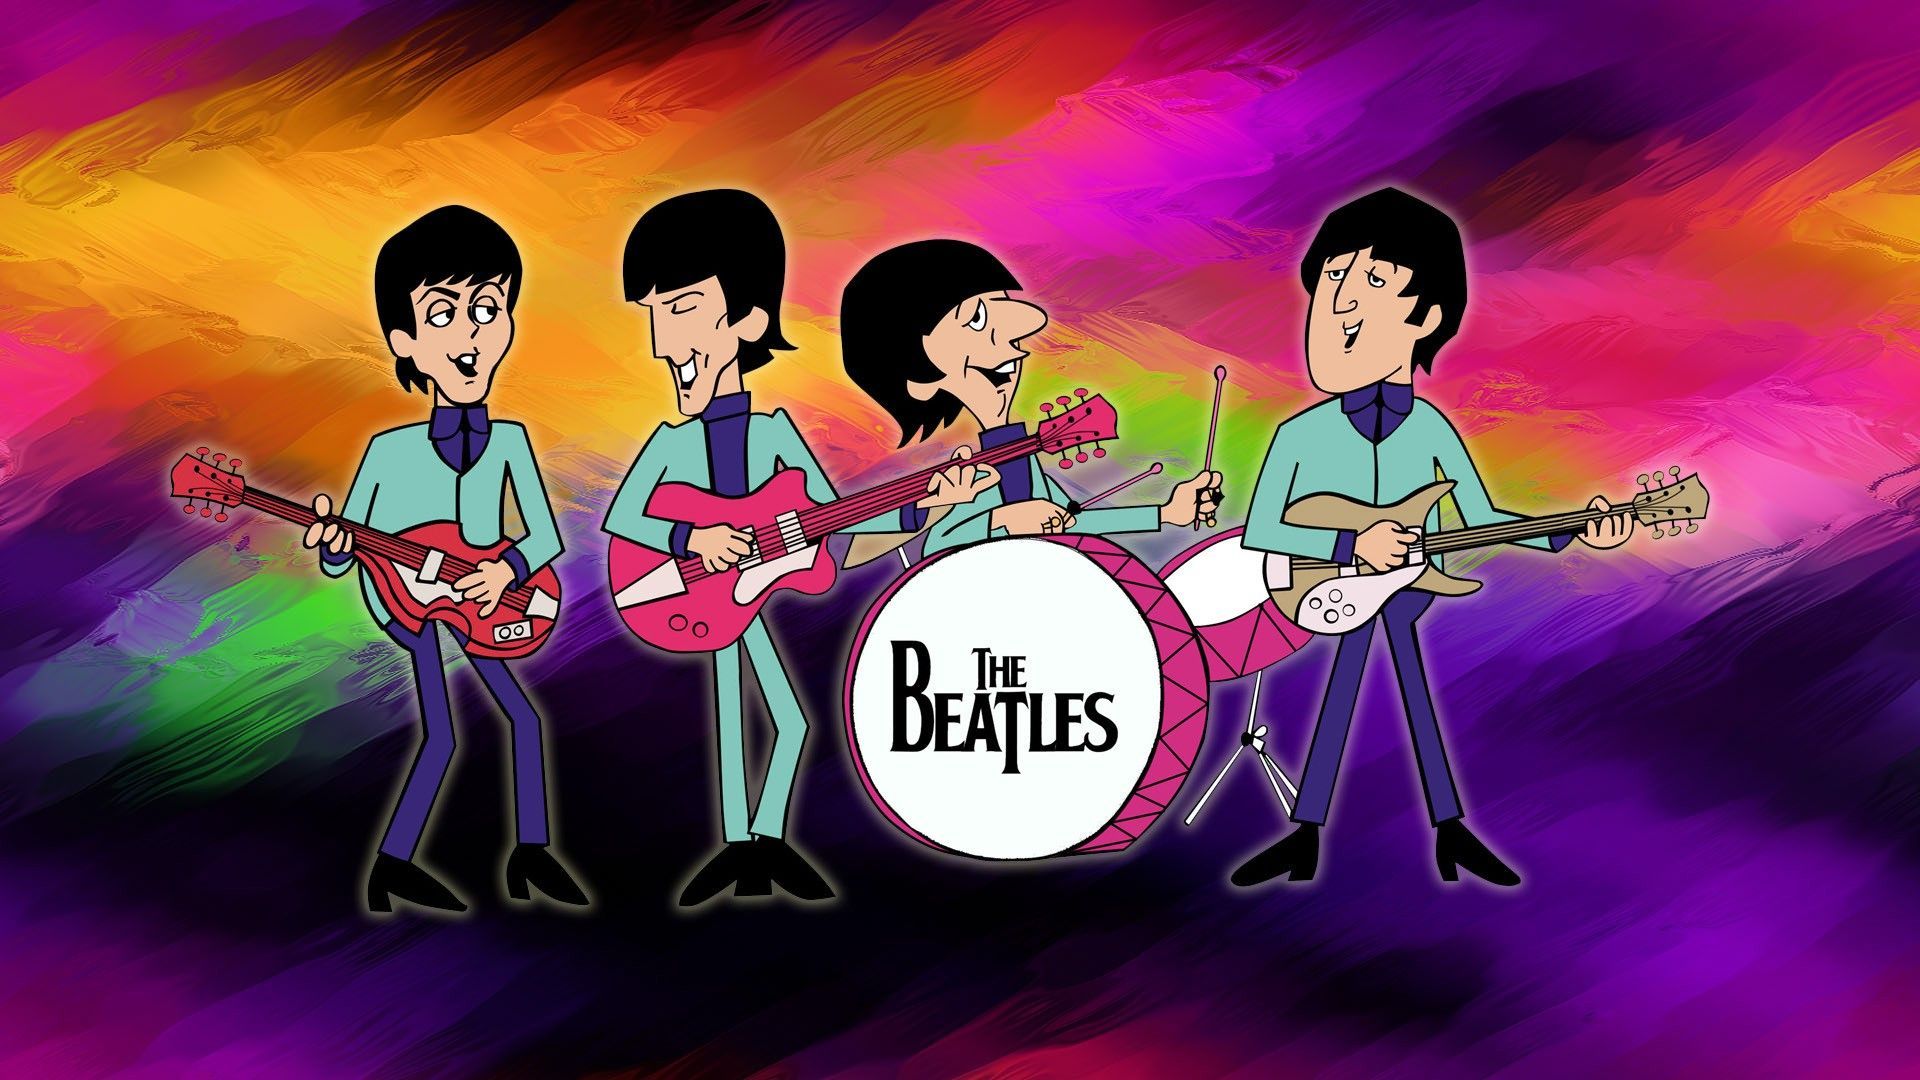 The Beatles desktop wallpaper - The Beatles Wallpaper (33733742 ...